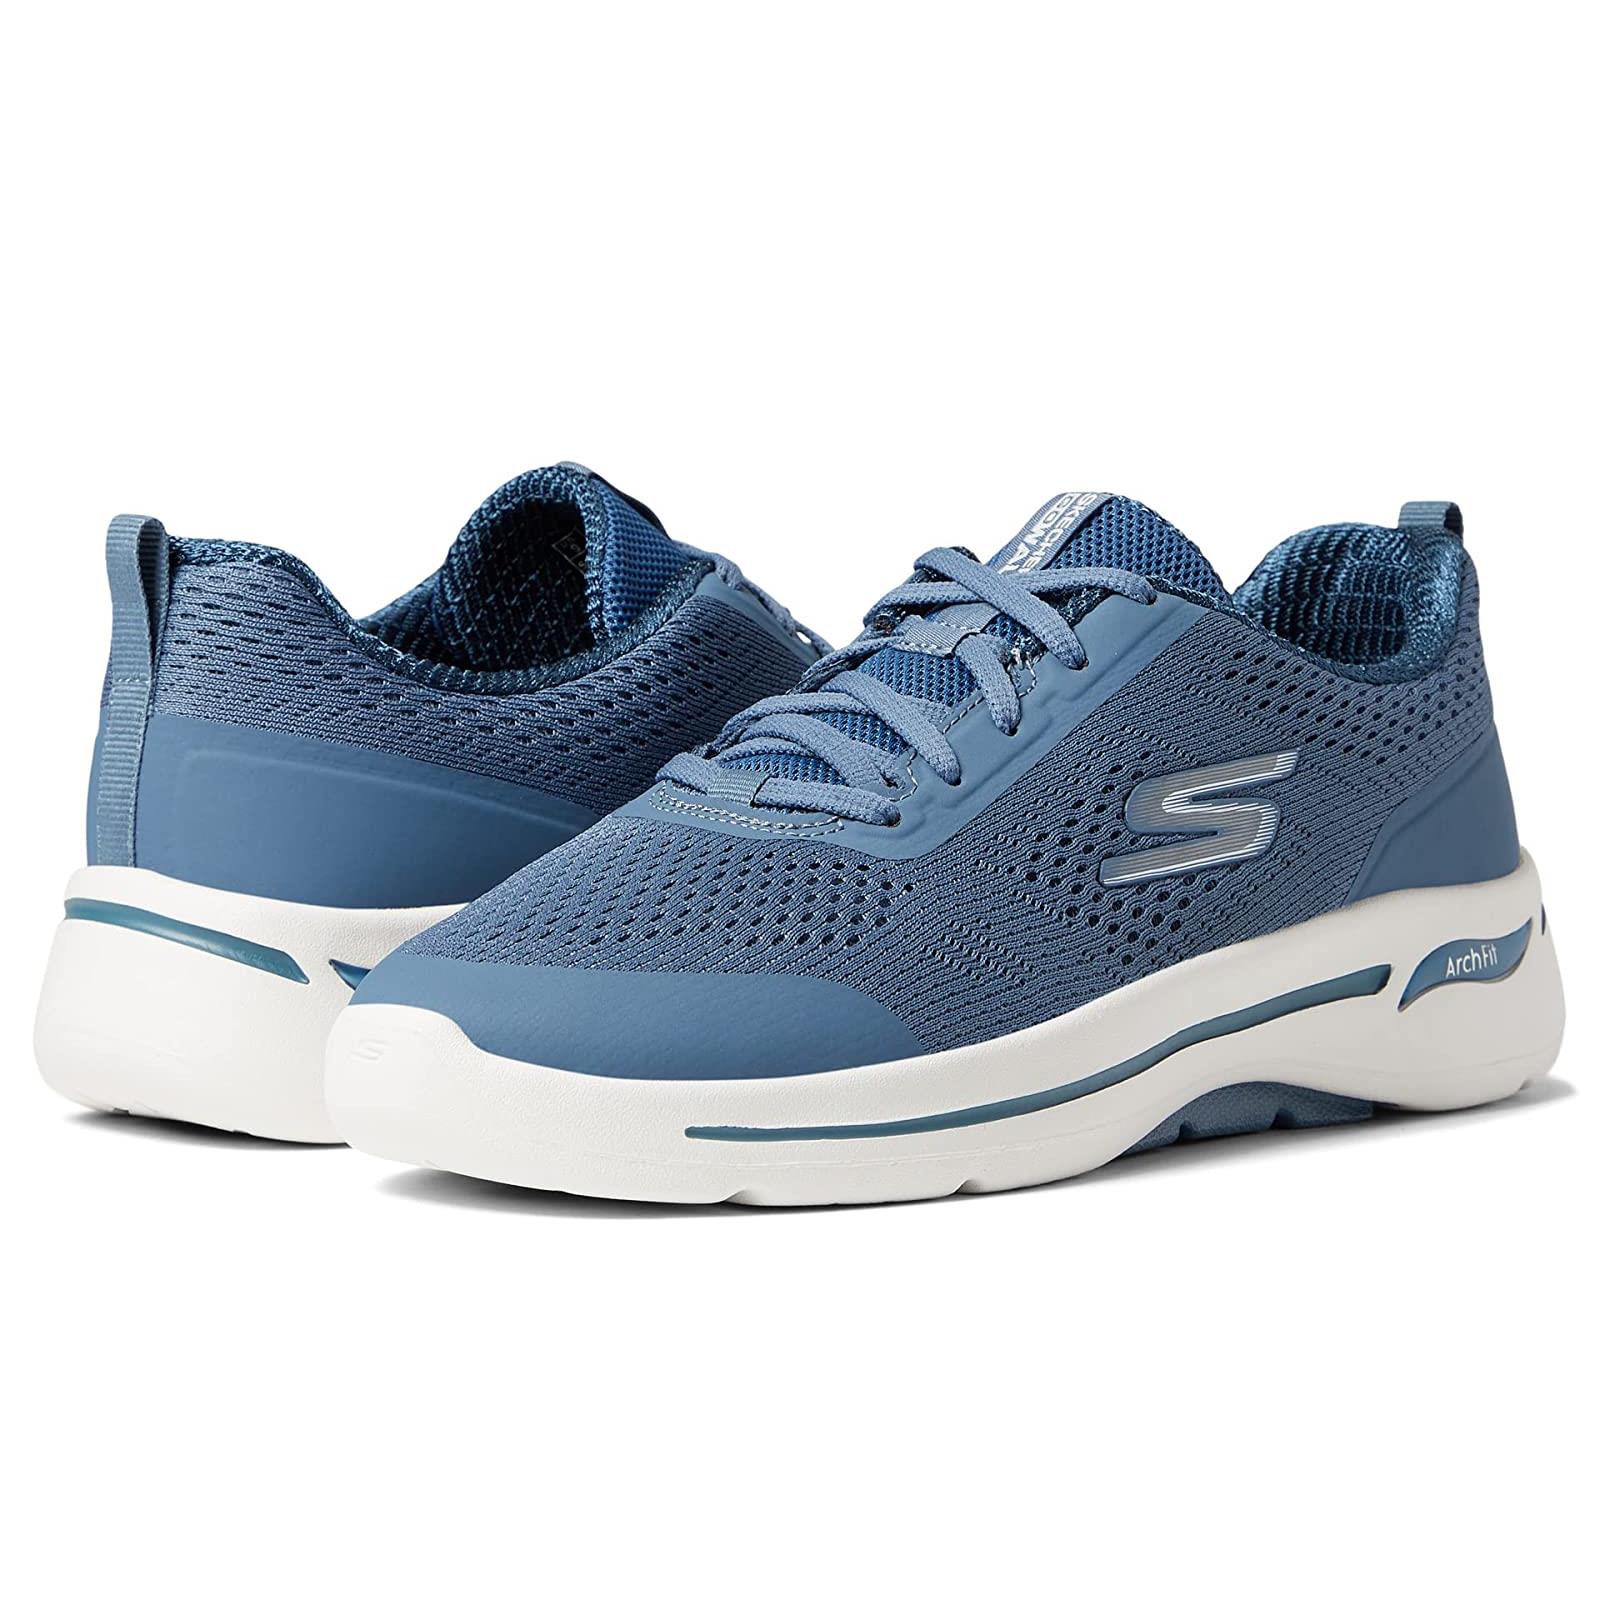 Woman`s Shoes Skechers Performance Go Walk Arch Fit - 124404 Blue